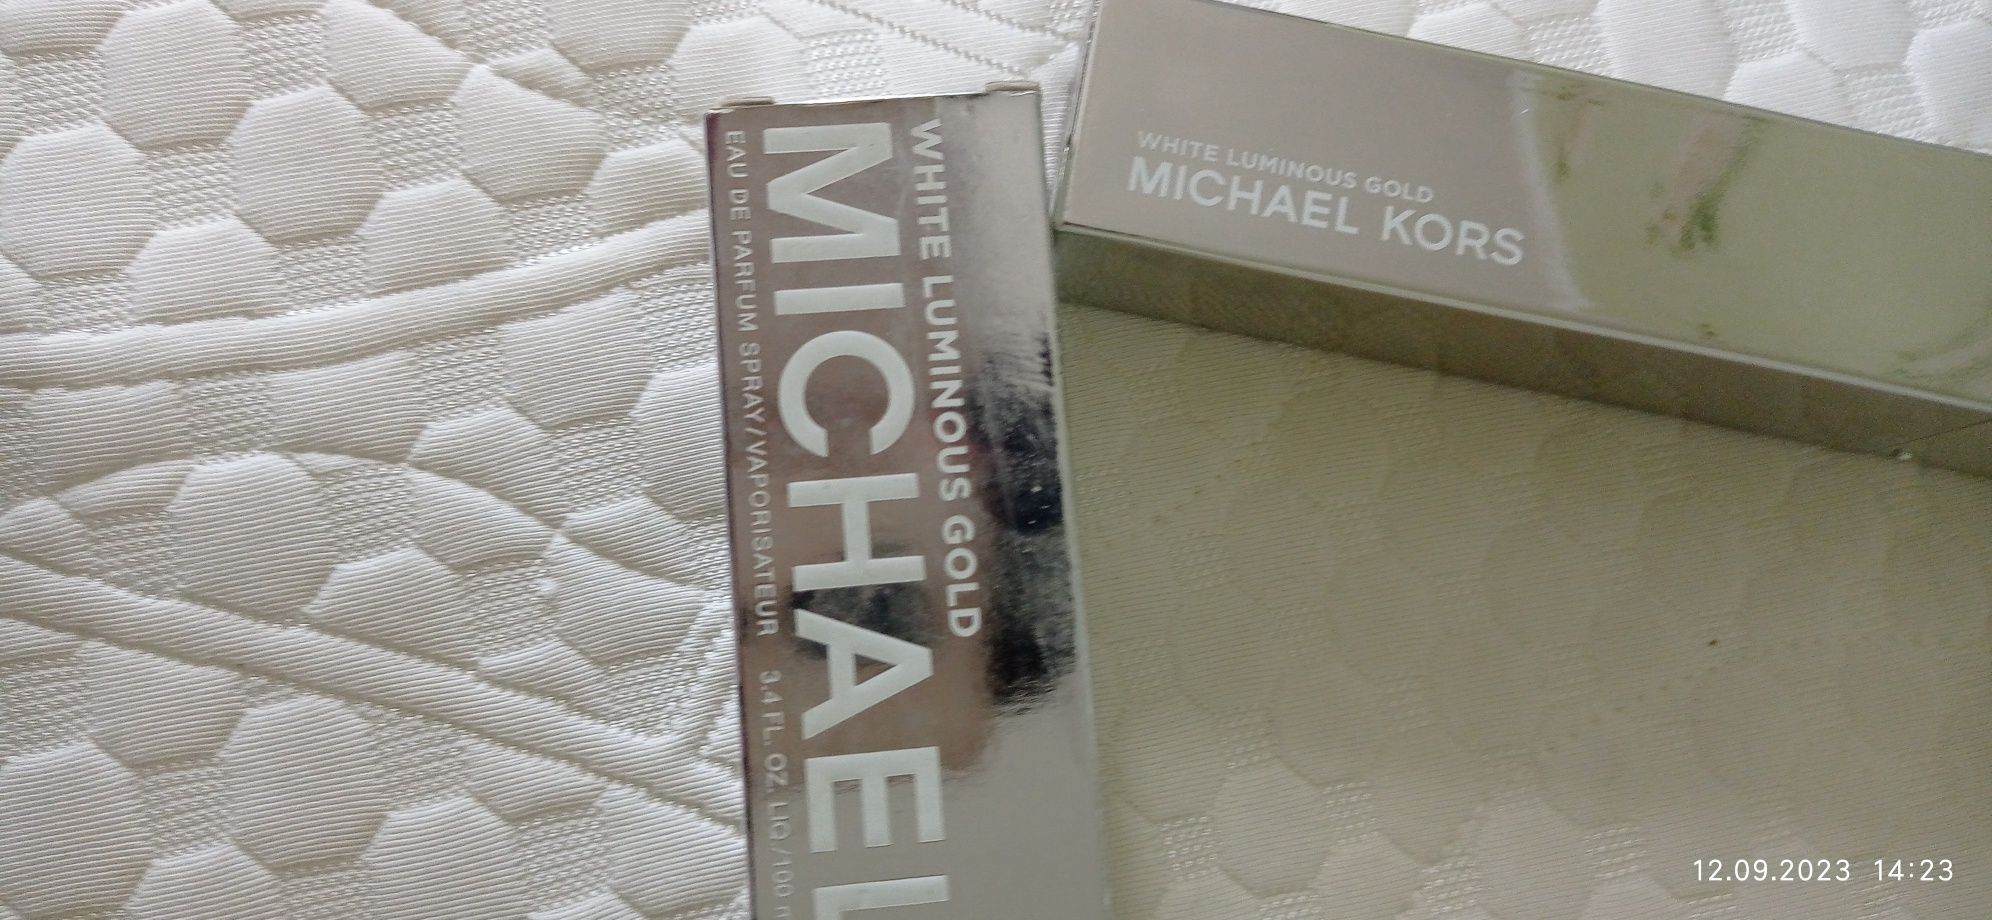 Жіночий парфюм Michael Kors White Luminous Gold